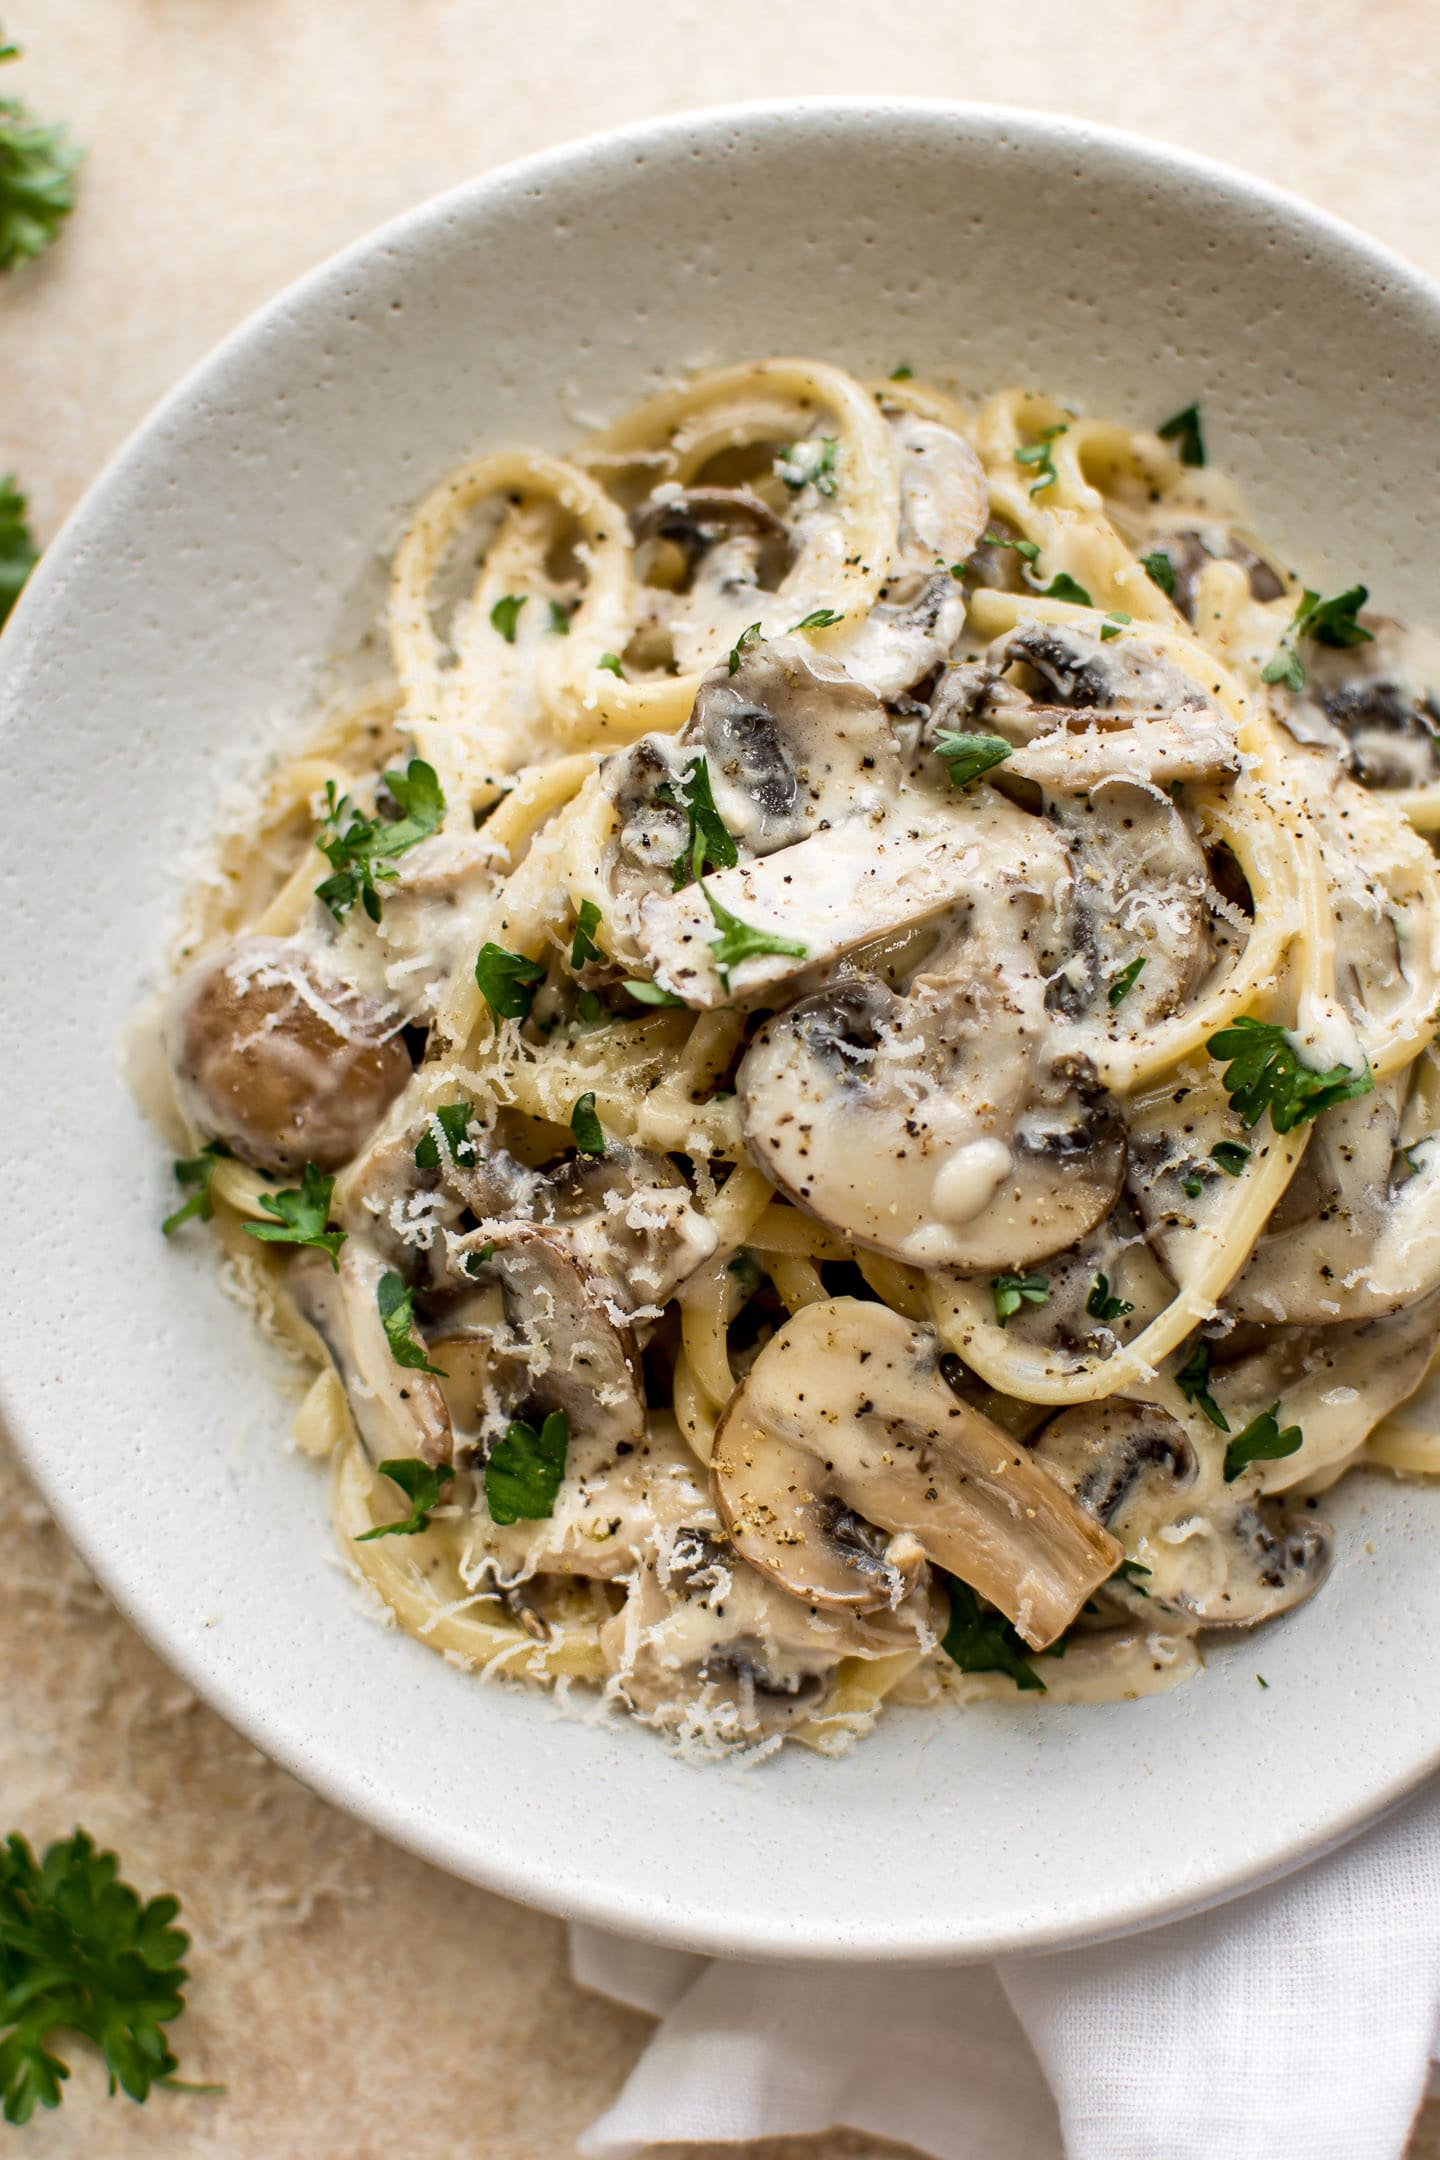 recipes using cream of mushroom soup and pasta